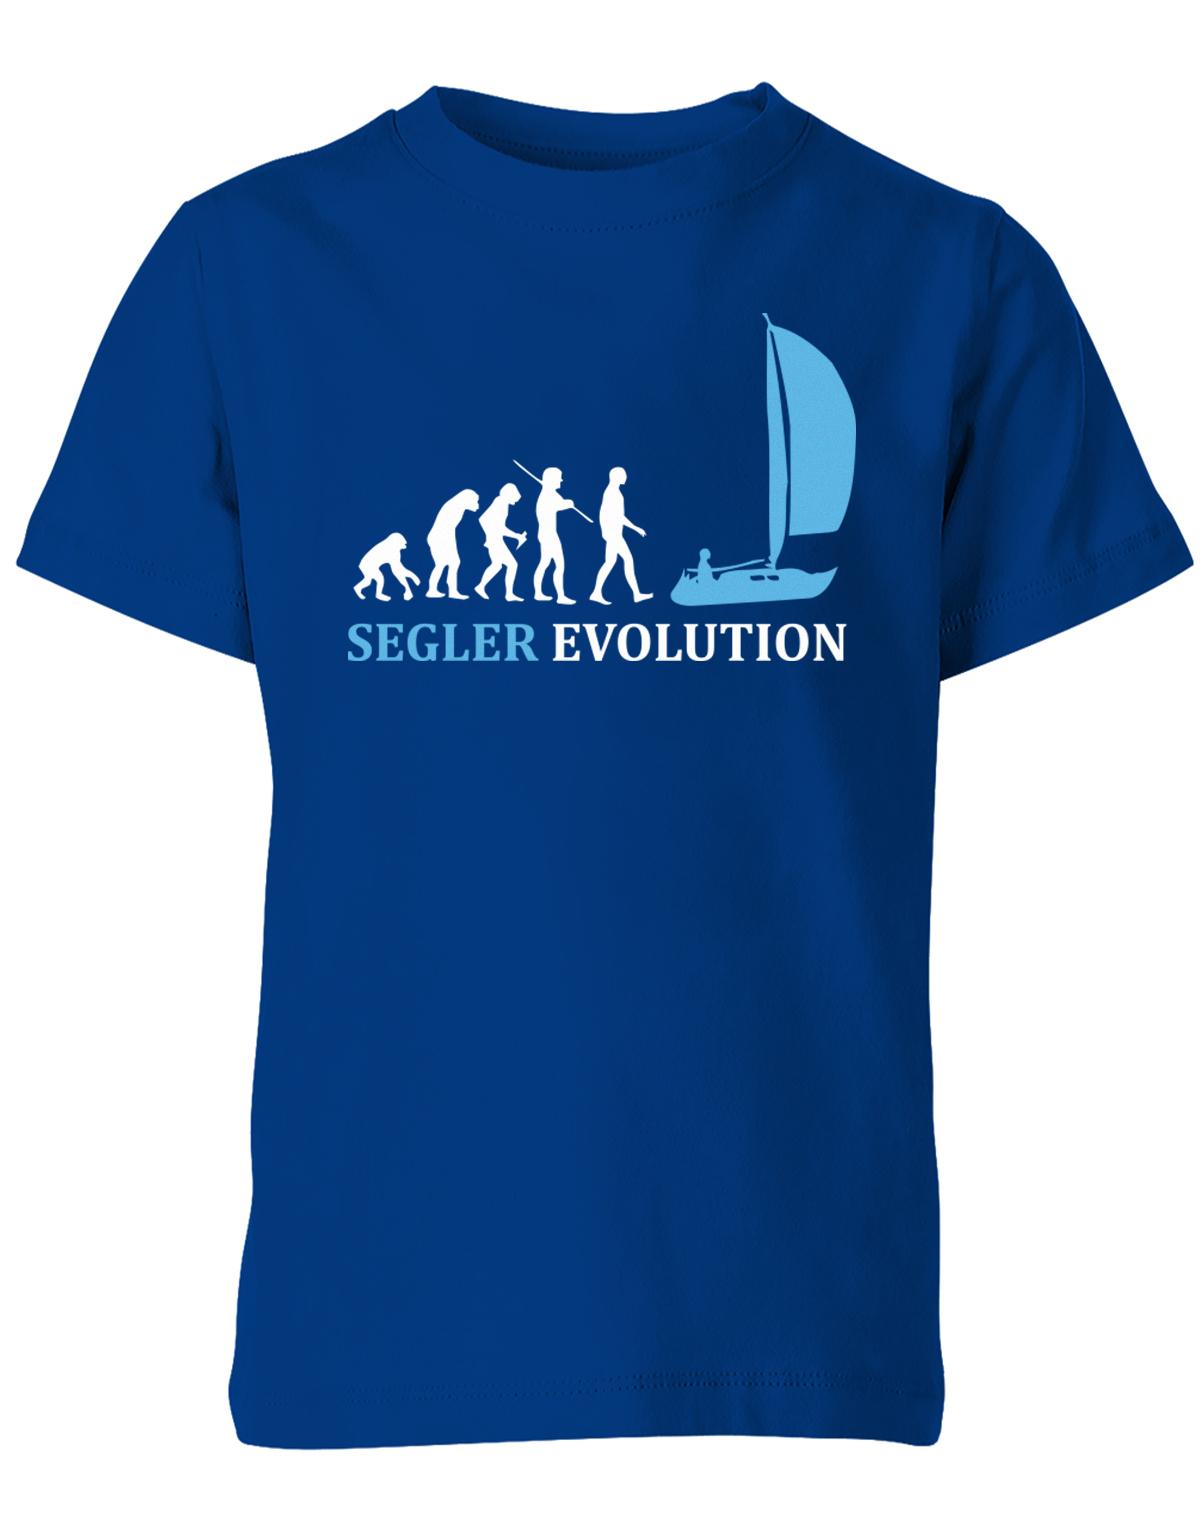 Segler-Evolution-Kinder-Shirt-Royalblau